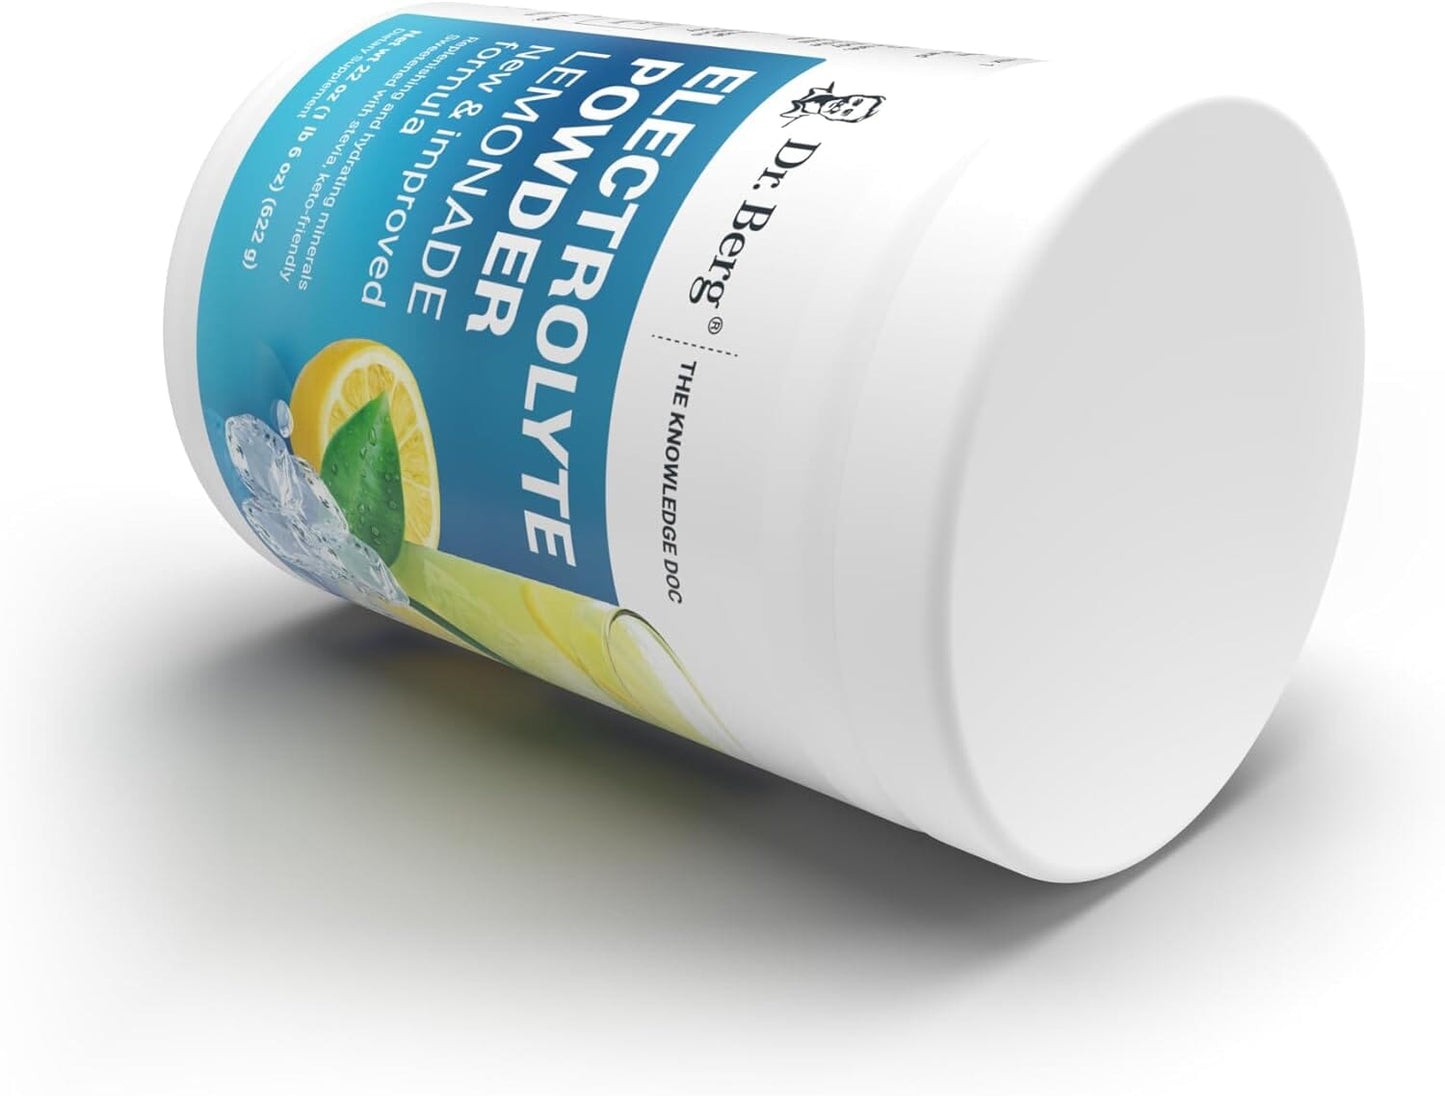 Dr. Berg Zero Sugar Hydration Keto Electrolyte Powder - Enhanced w/ 1,000mg of Potassium & Real Pink Himalayan Salt (NOT Table Salt) - Lemonade Flavor Hydration Drink Mix Supplement - 100 Servings